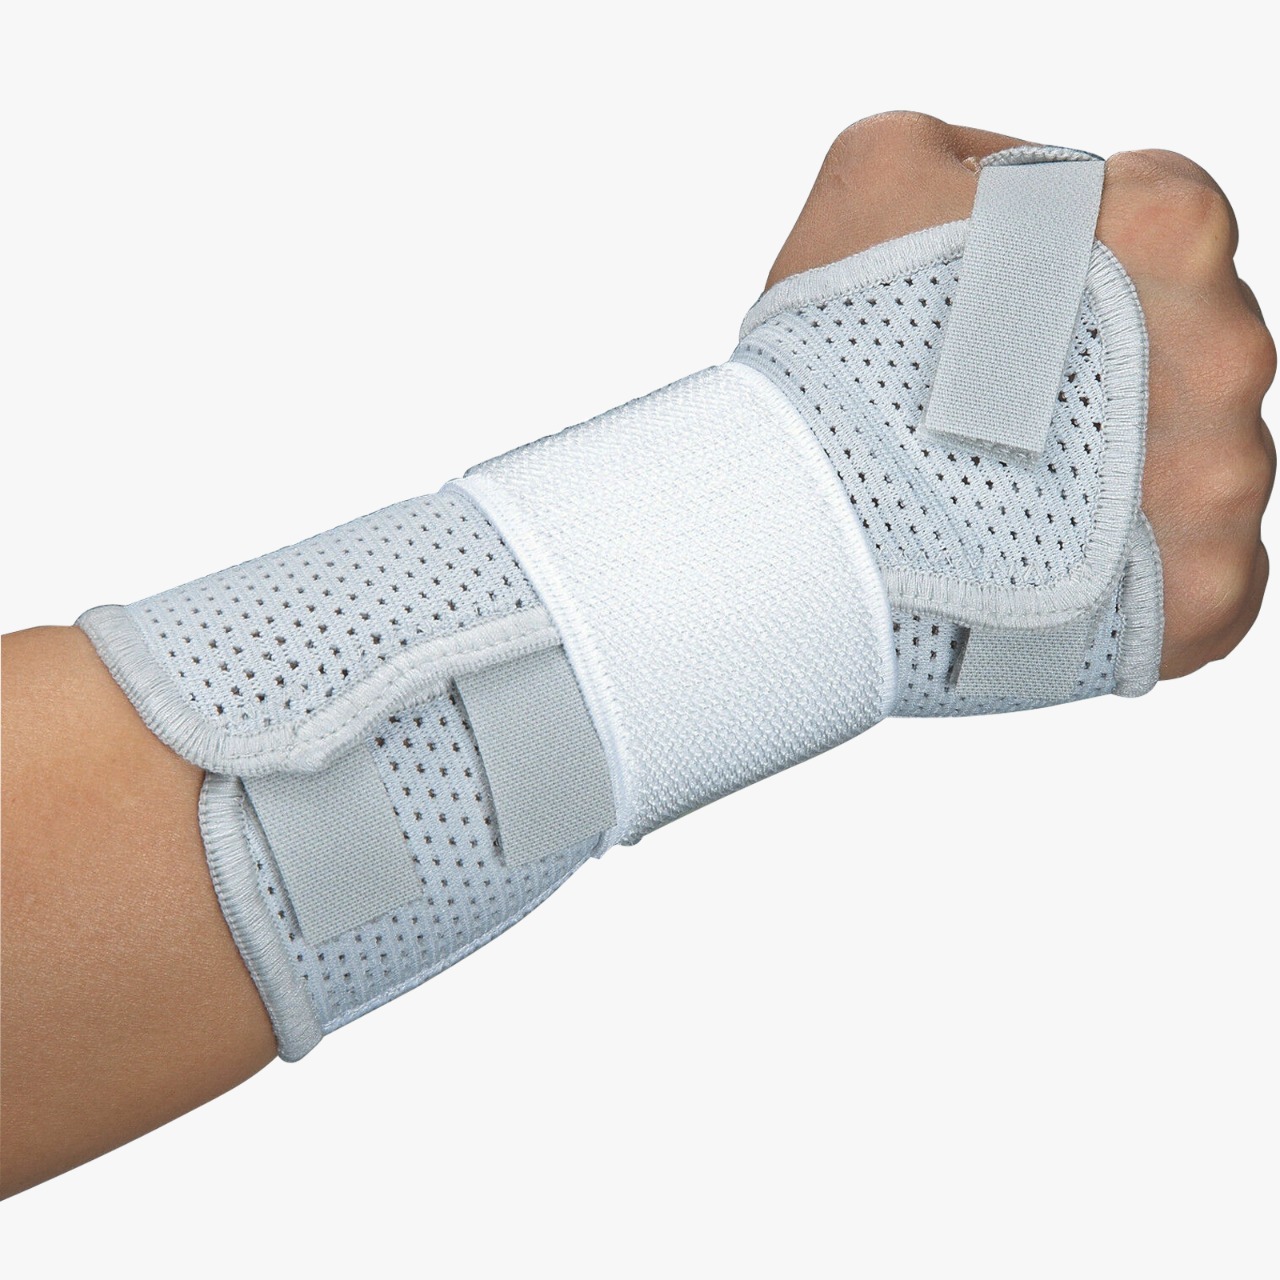 Small Right Hand Breathable Wrist Support Brace Splint For Carpal Tunnel, Arthritis Sprain Strain